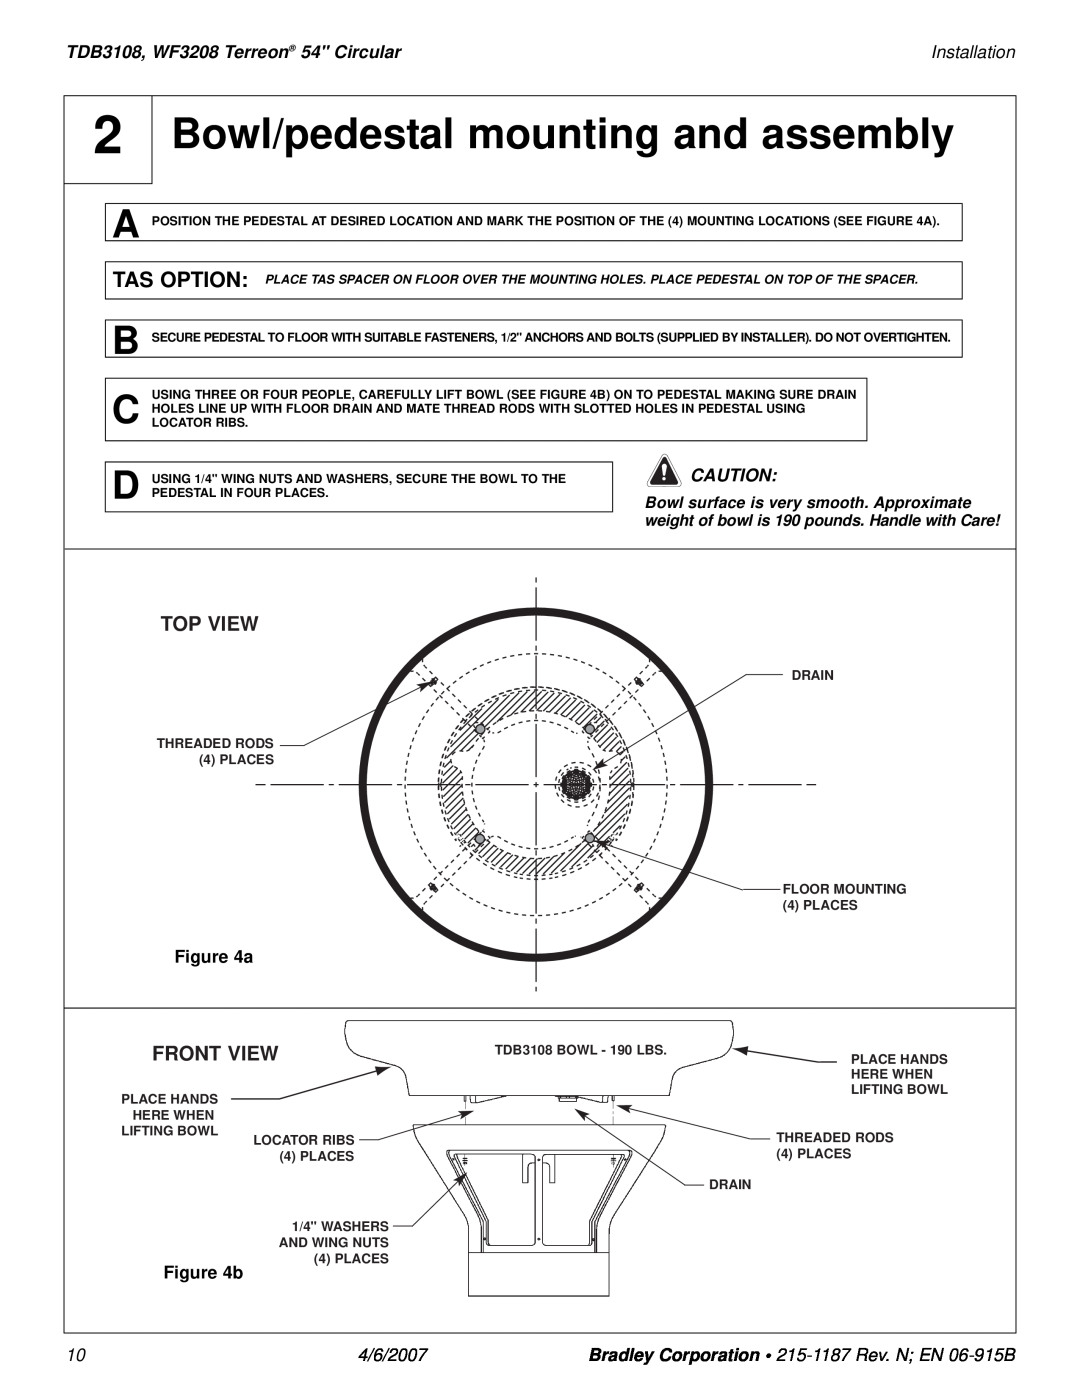 Bradley Smoker Bowl/pedestal mounting and assembly, Top View, Front View, TDB3108, WF3208 Terreon 54 Circular, 4/6/2007 